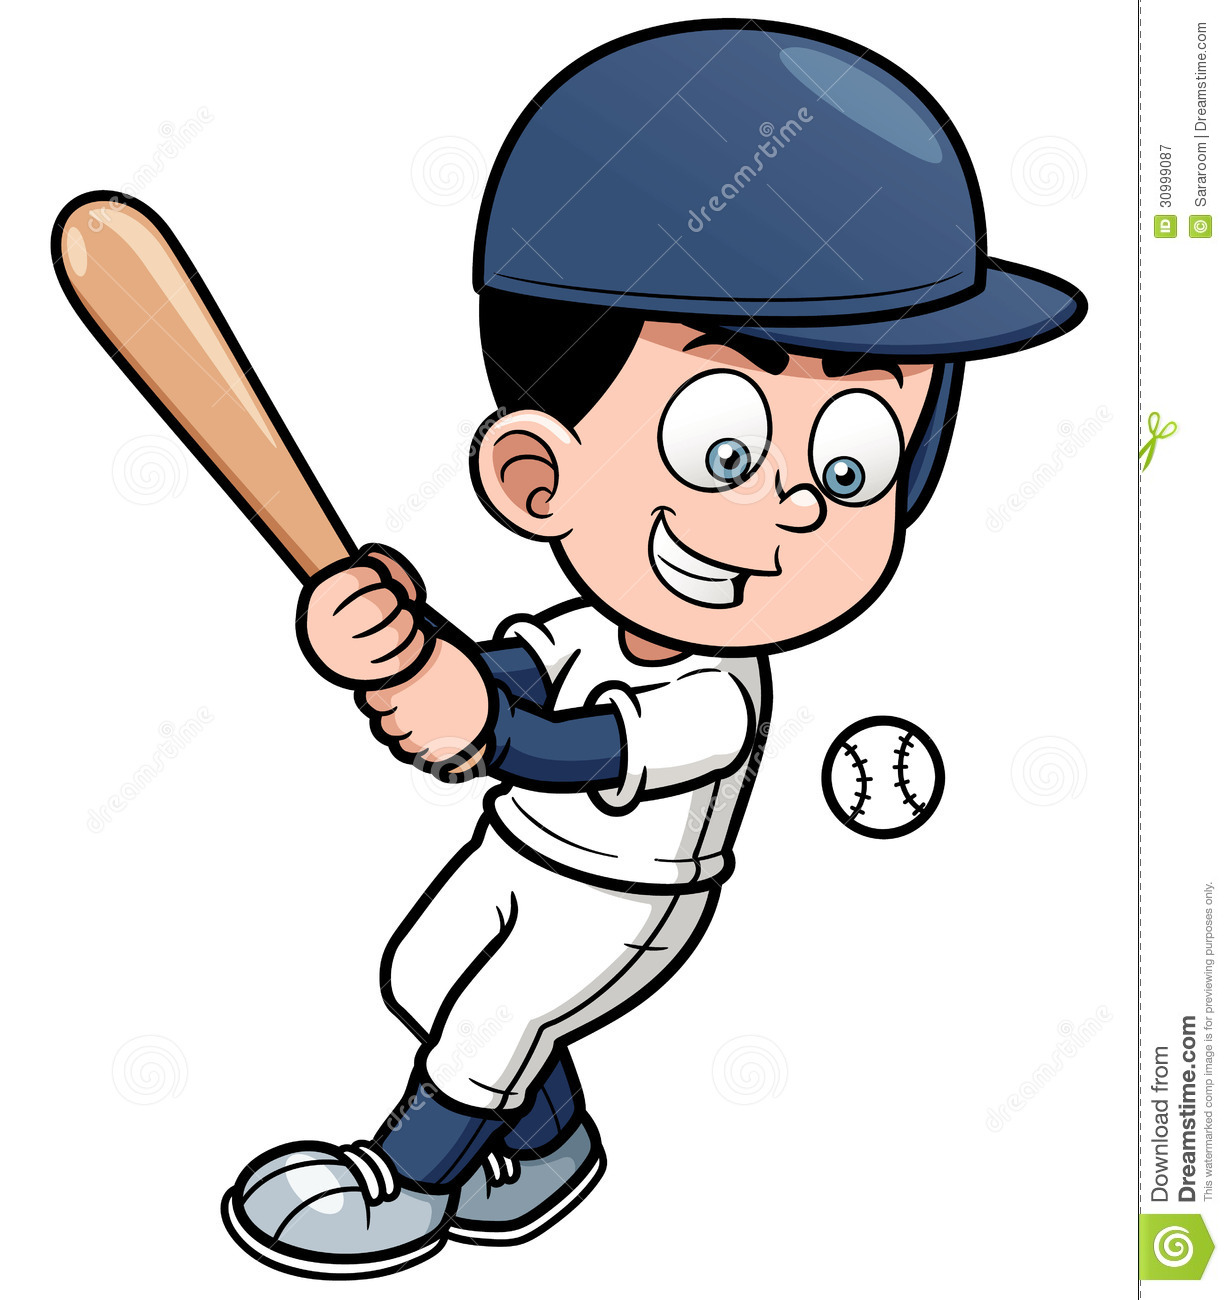 Cartoon Baseball Player Royalty Free Stock Photography   Image    